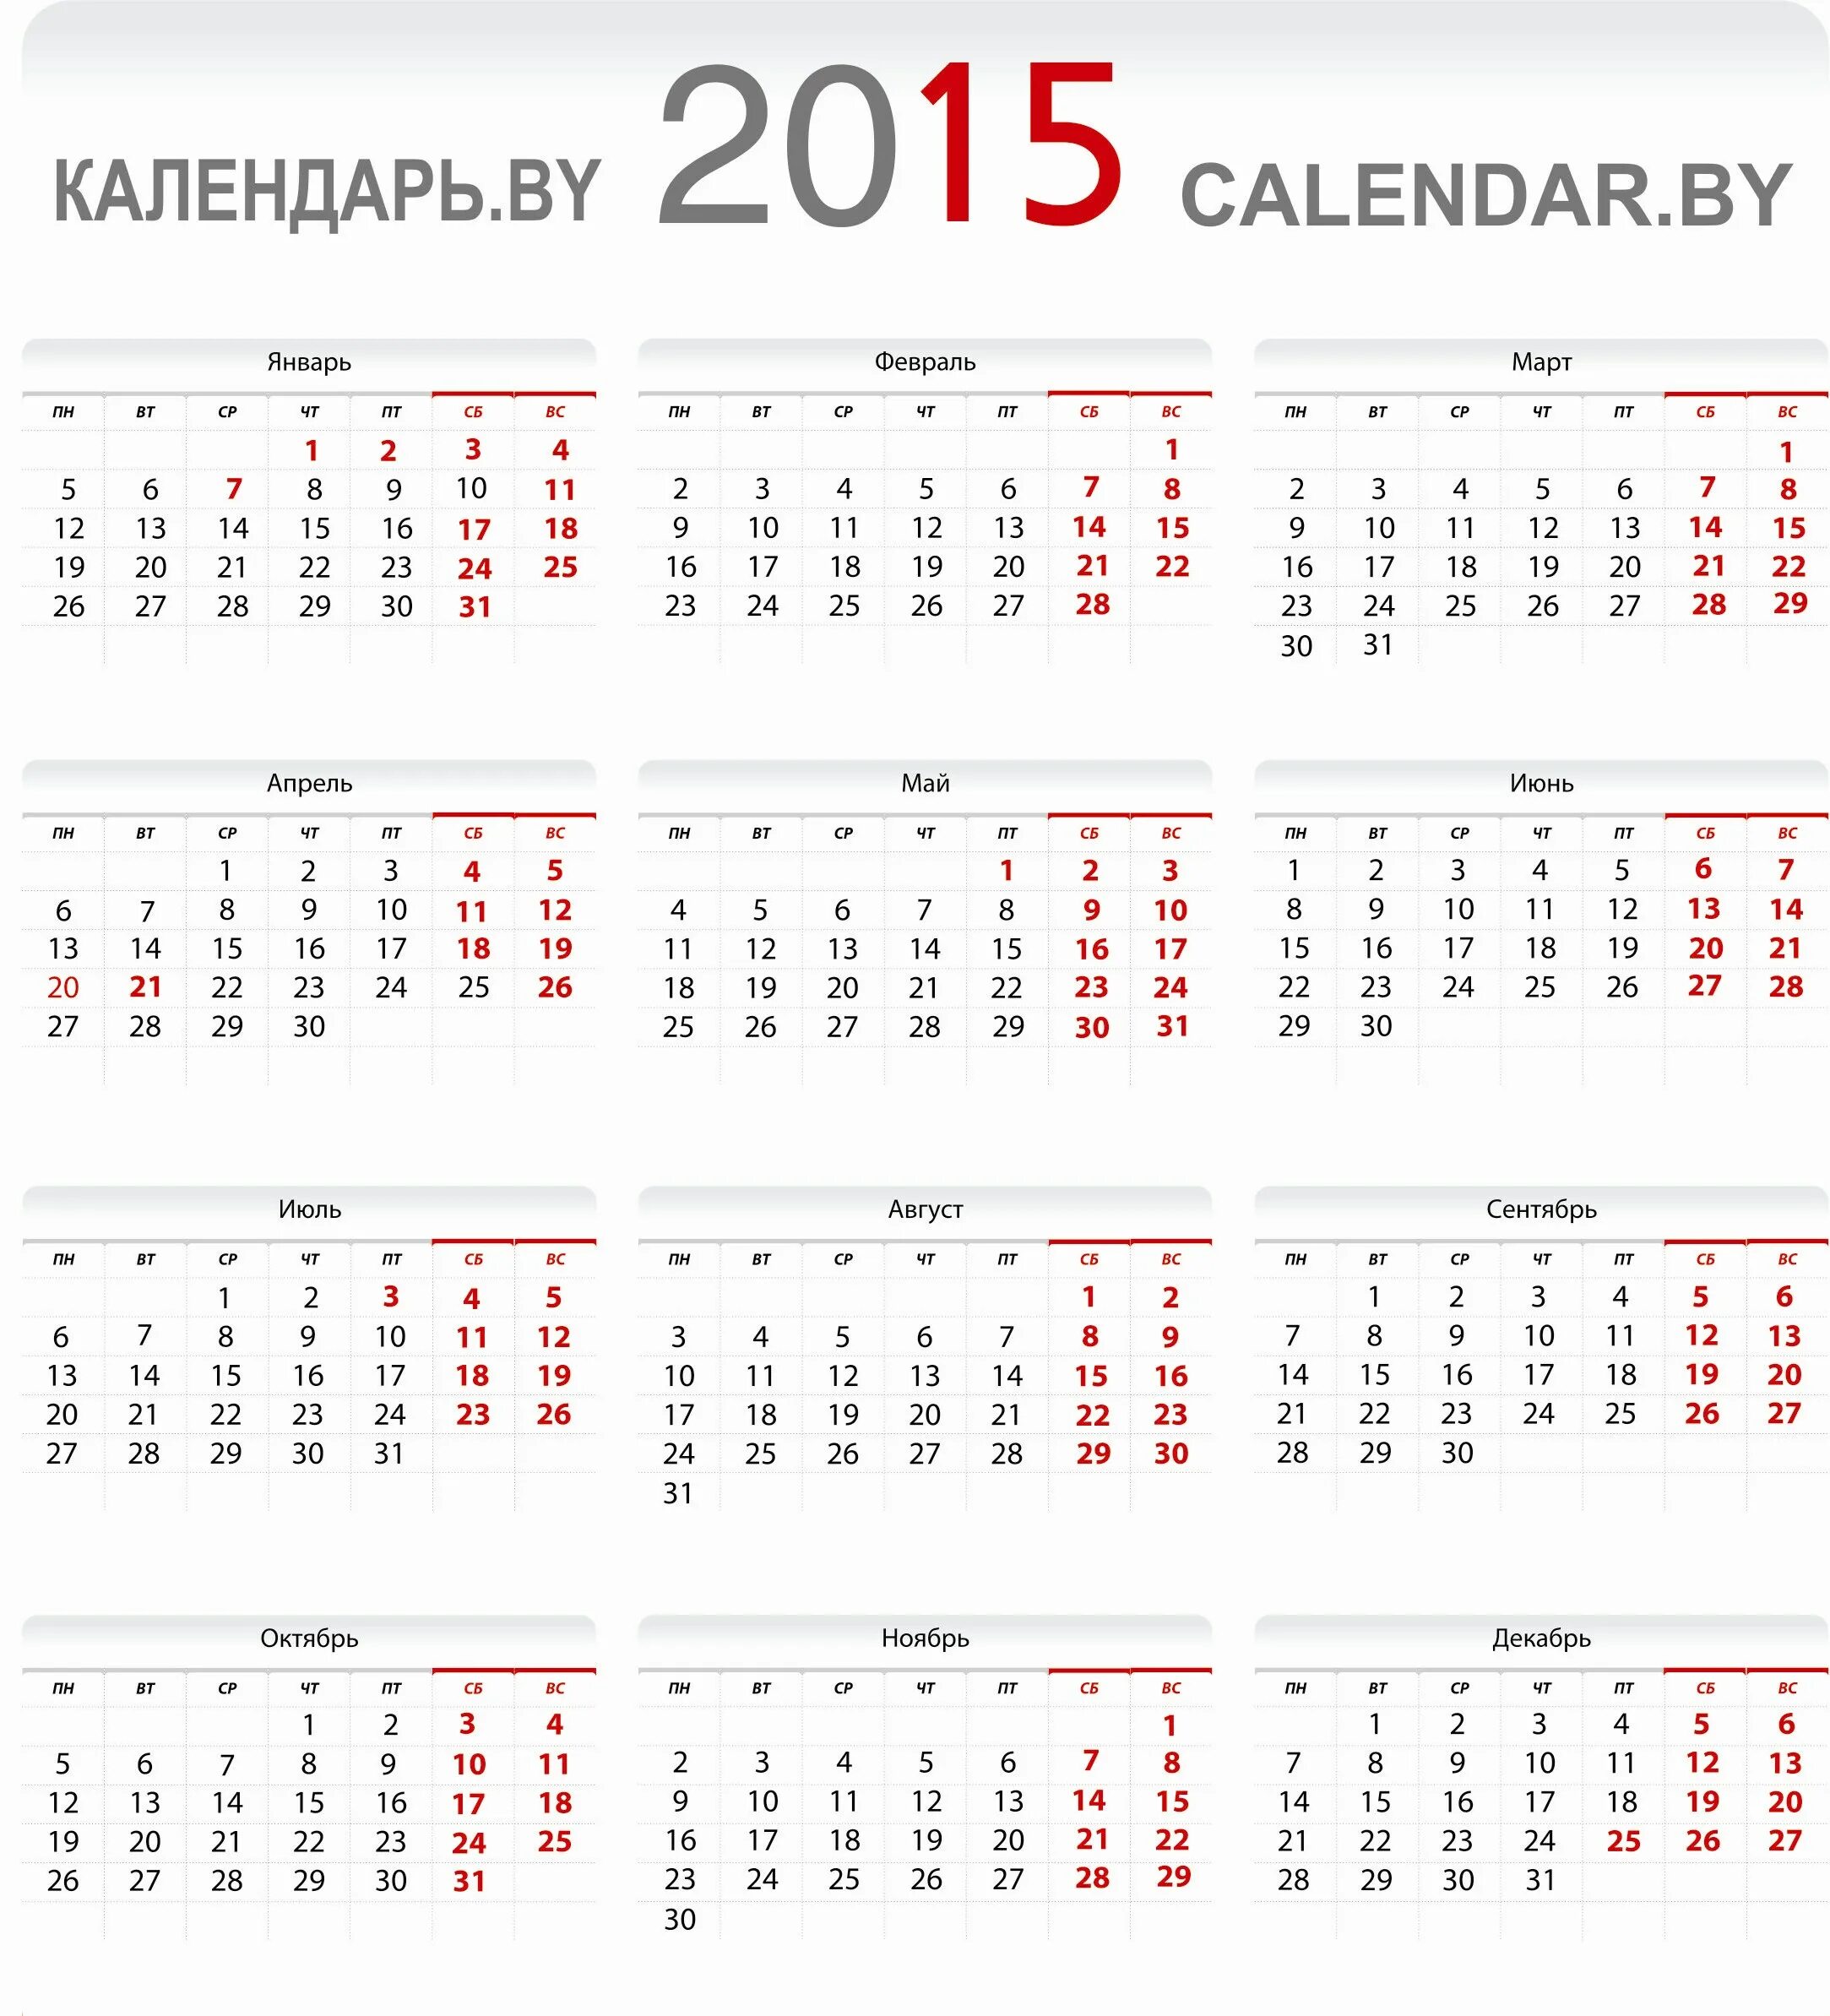 4 декабрь 2015. Календарь 2015. Календарь на 2015 год. Календарь 2015г. Календарь 2015 года по месяцам.